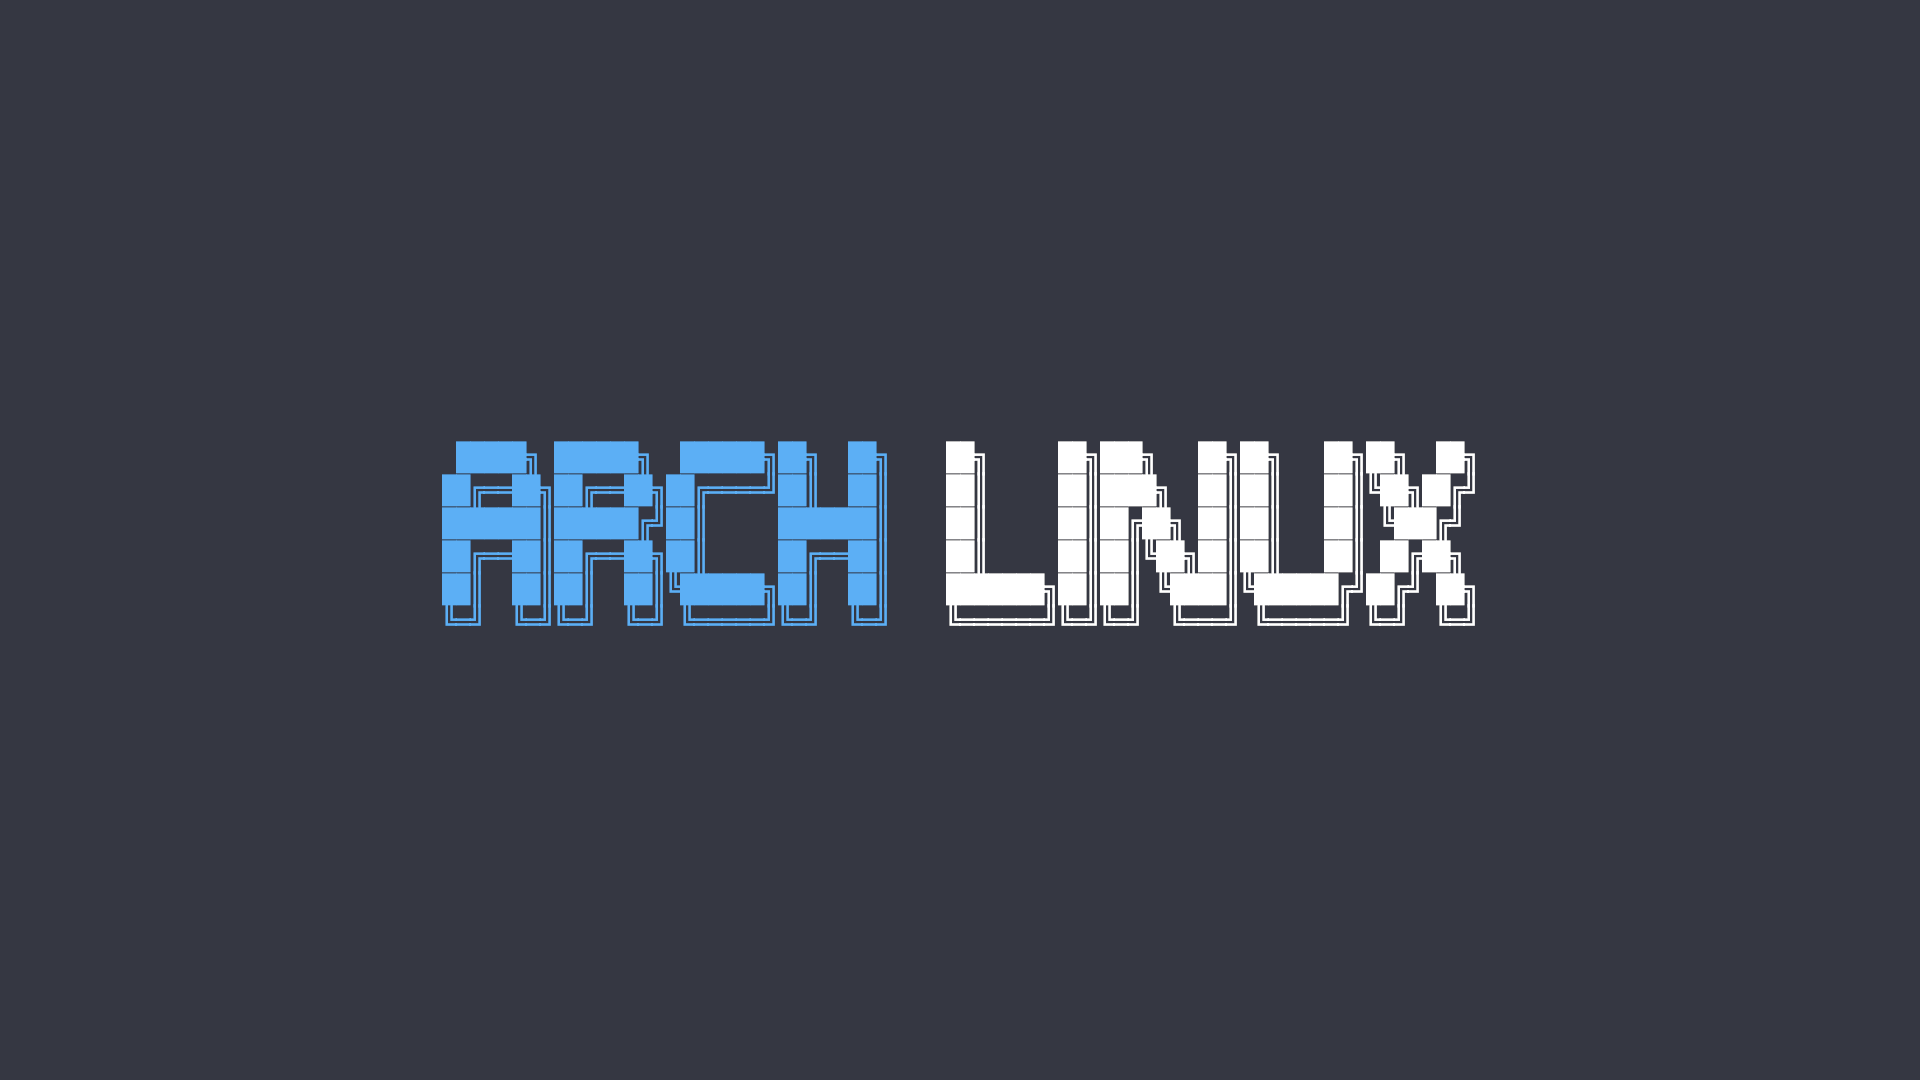 General 1920x1080 Arch Linux ASCII art blue simple background digital art terminal minimalism